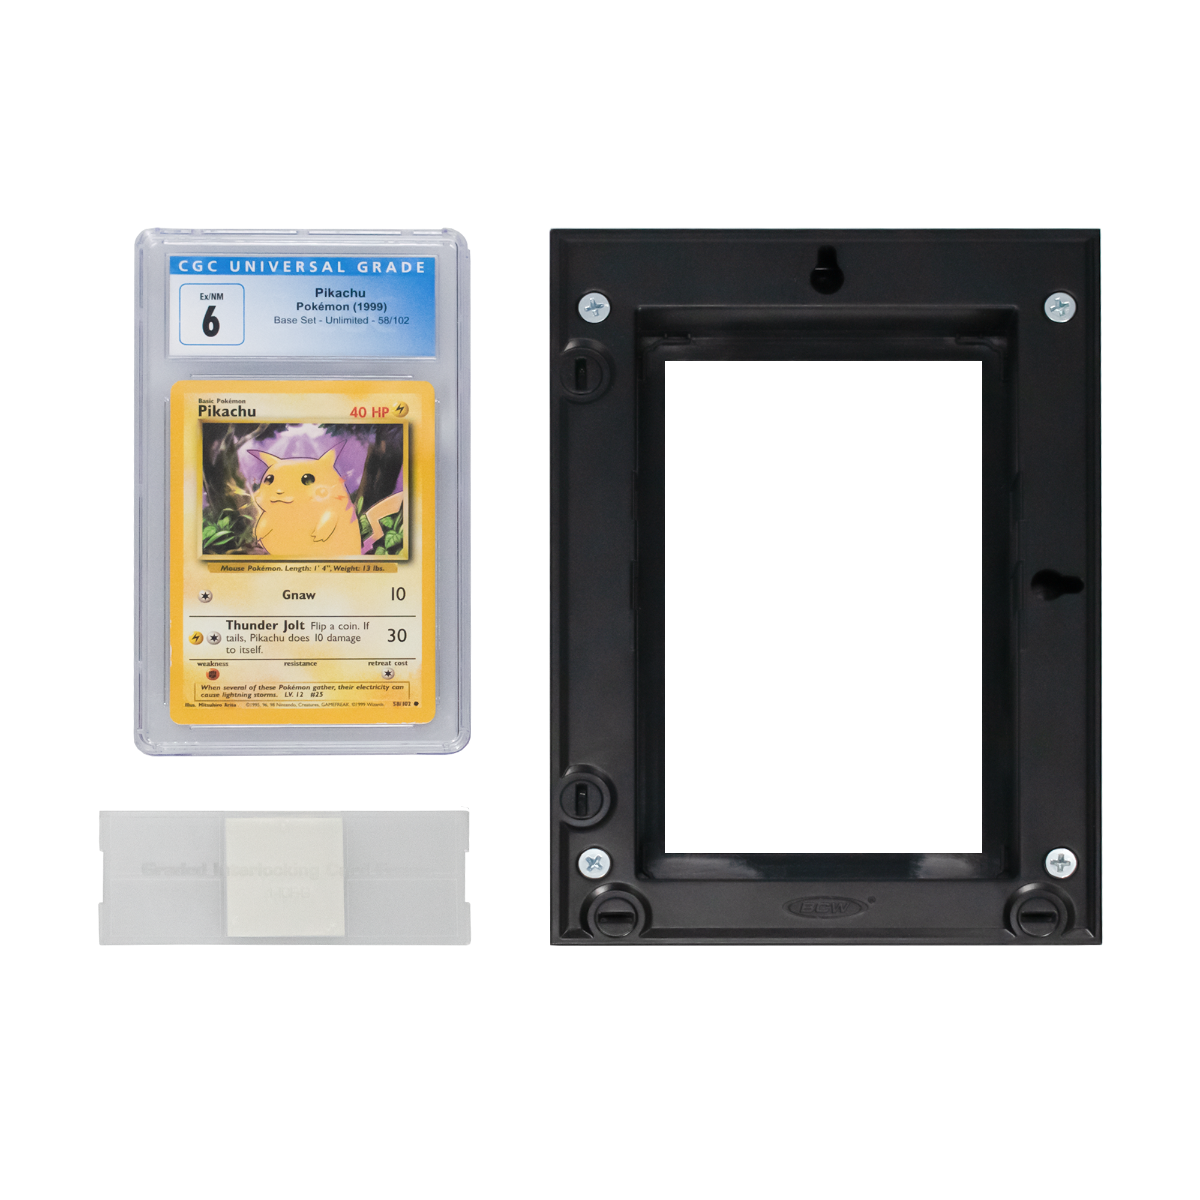 BCW - Interlocking Graded Card Frames - Black (4 pack)